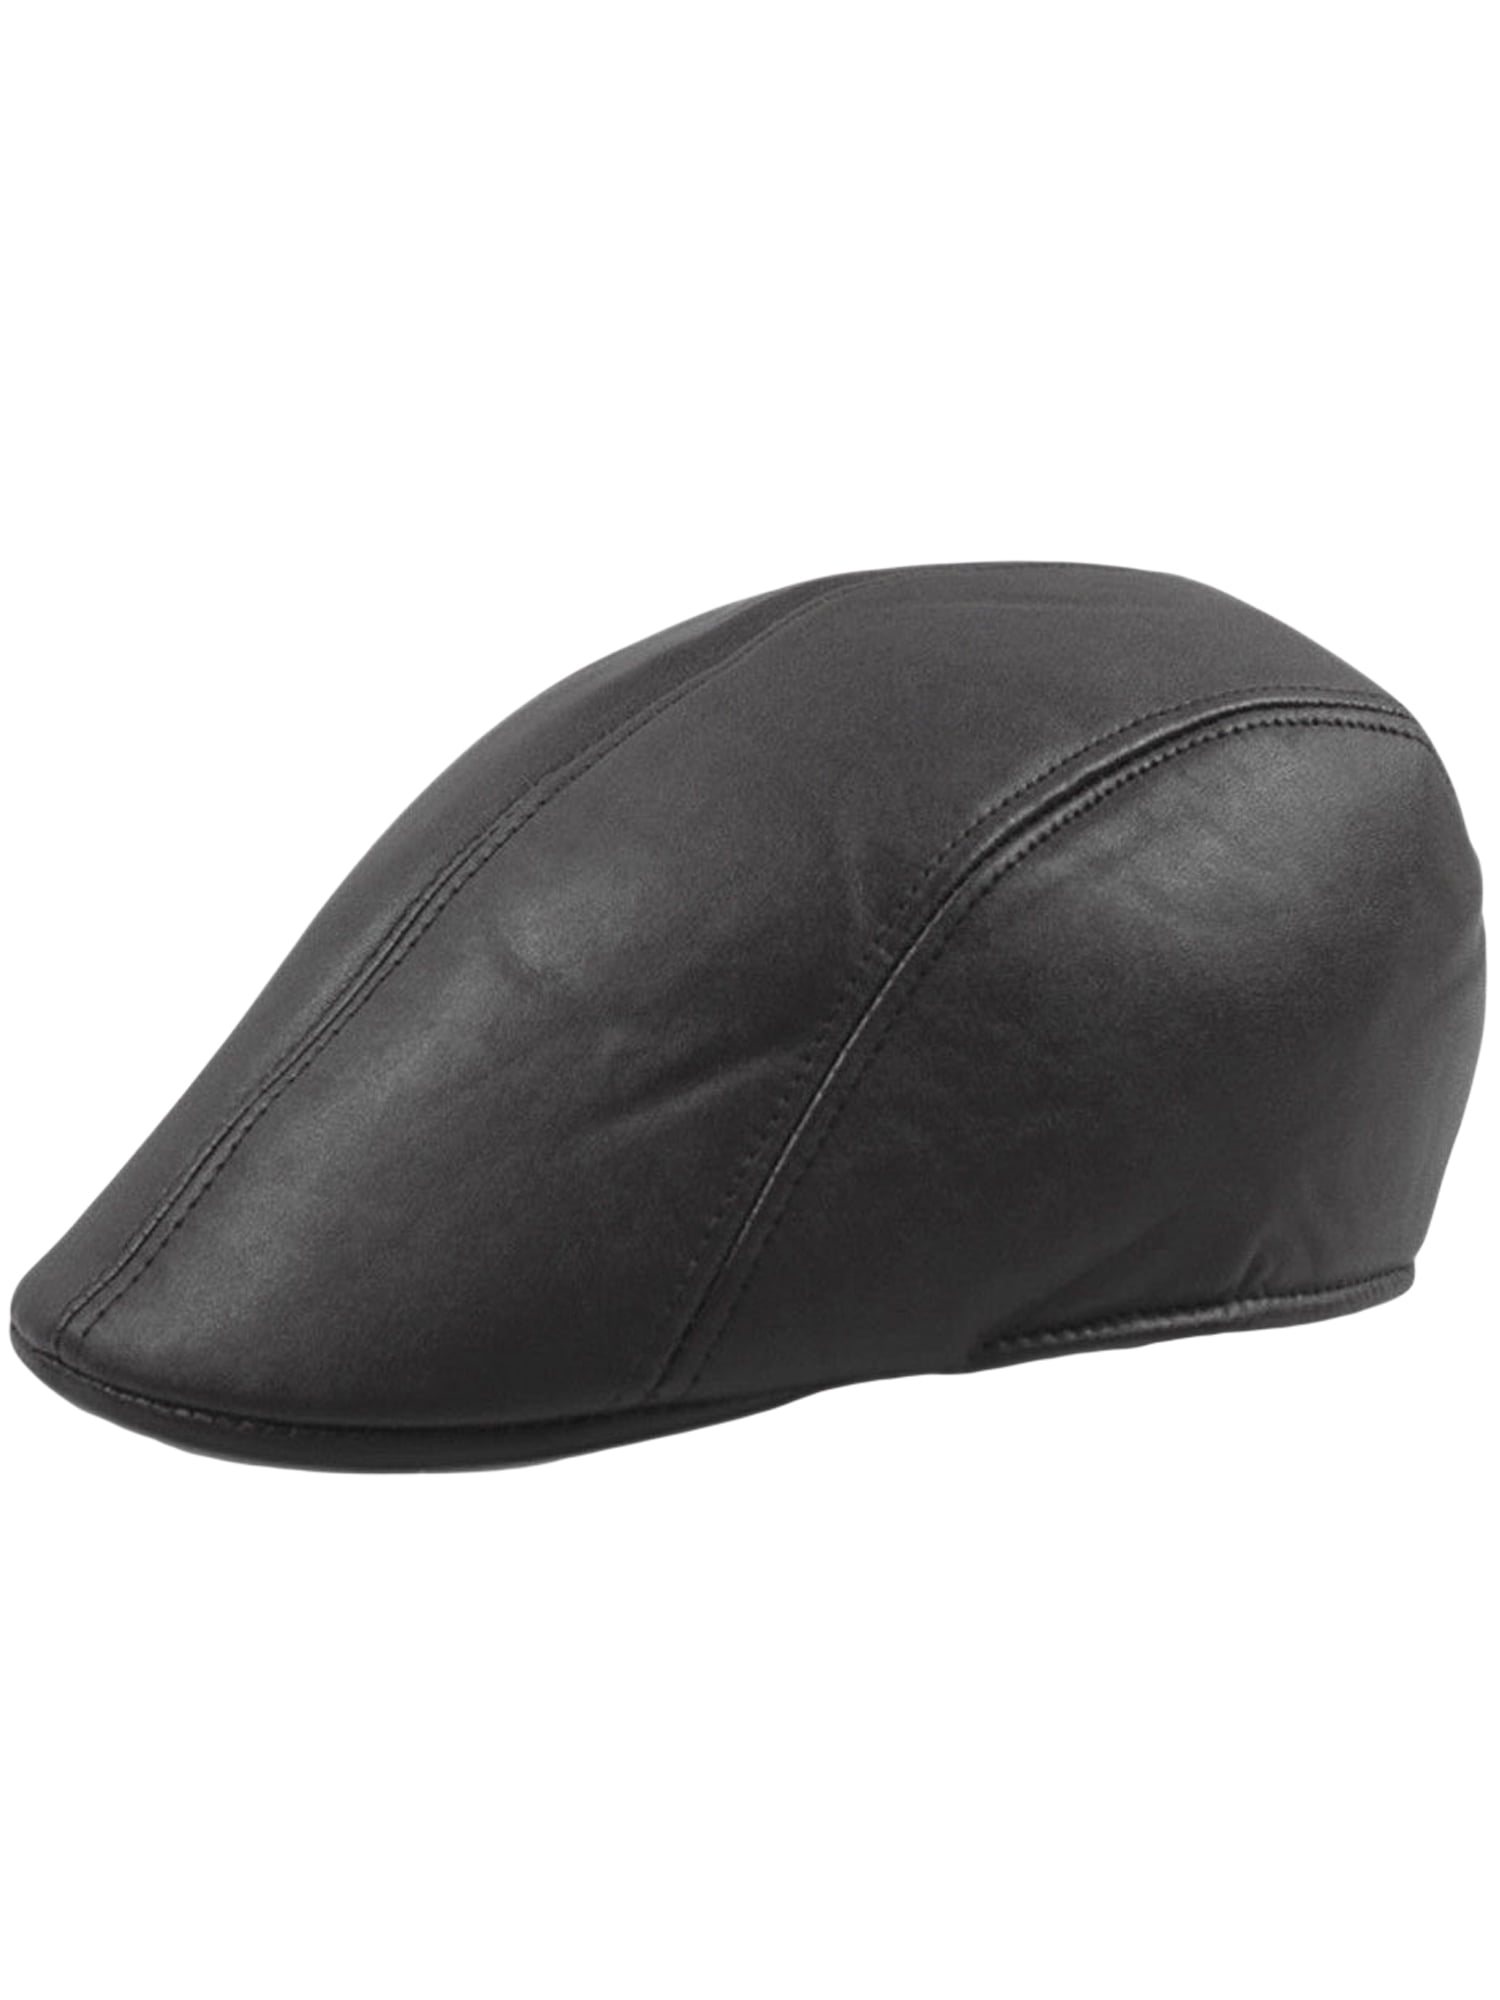 Vintage Mens Leather Flat Ivy Caps Newsboy Gatsby Bonnet Cabbie Biker Beret Hat 